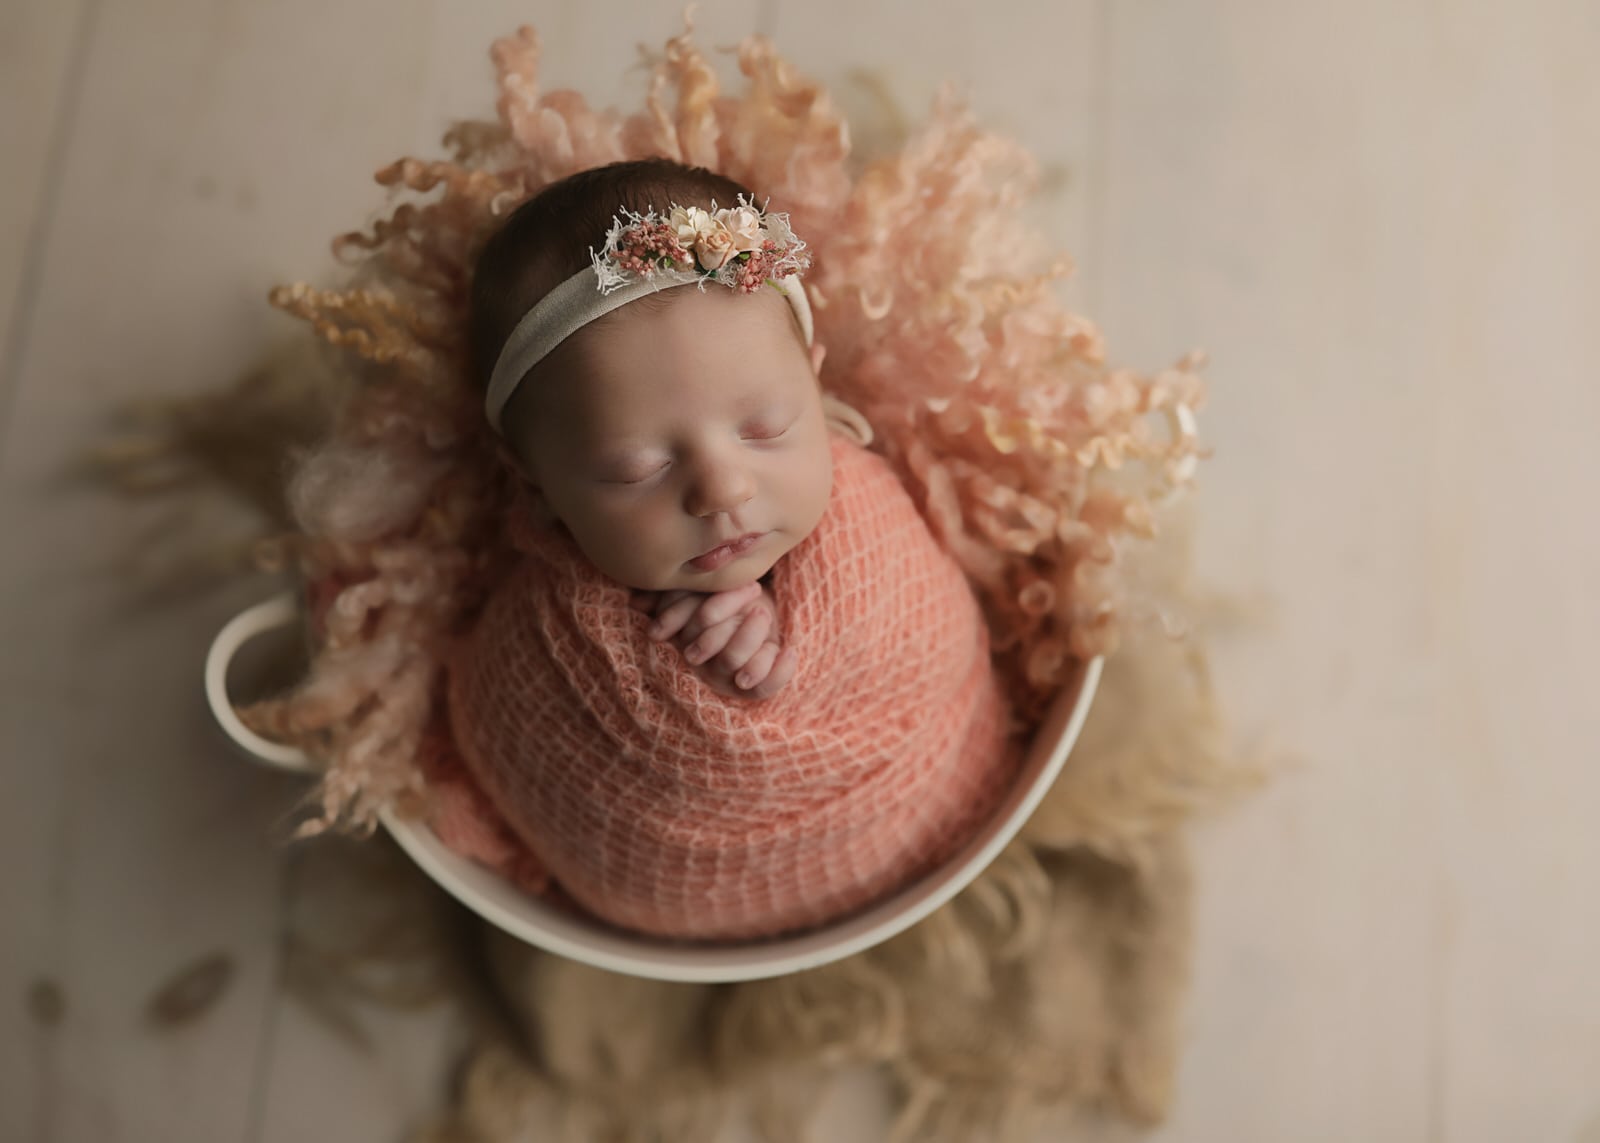 harrisburg pa newborn photographer captures image of baby girl in pink